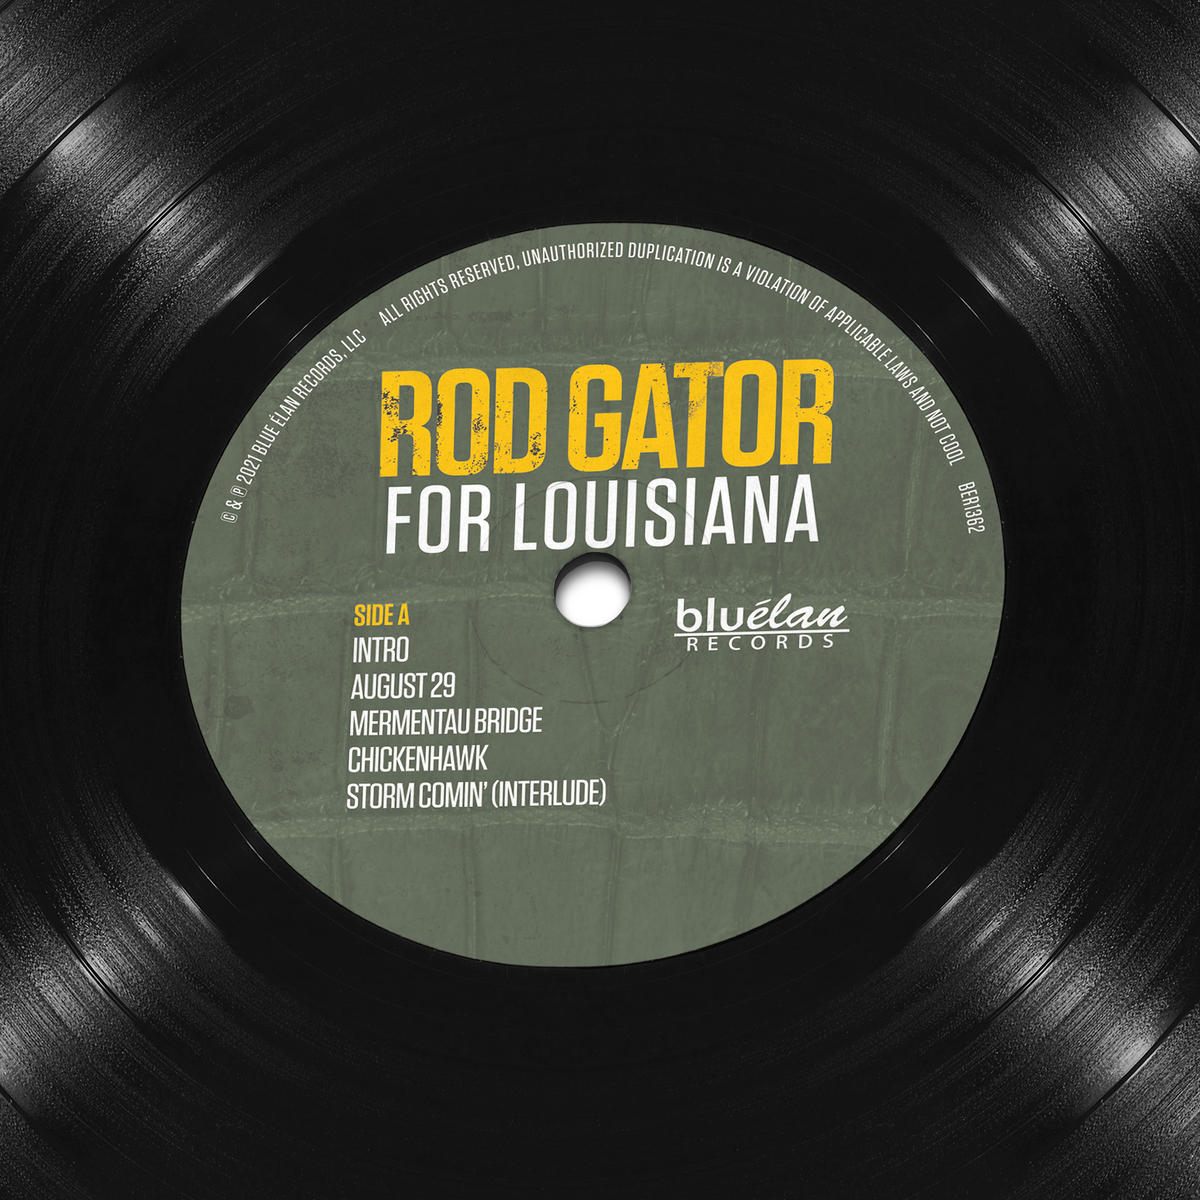 For Louisiana - 180g LP